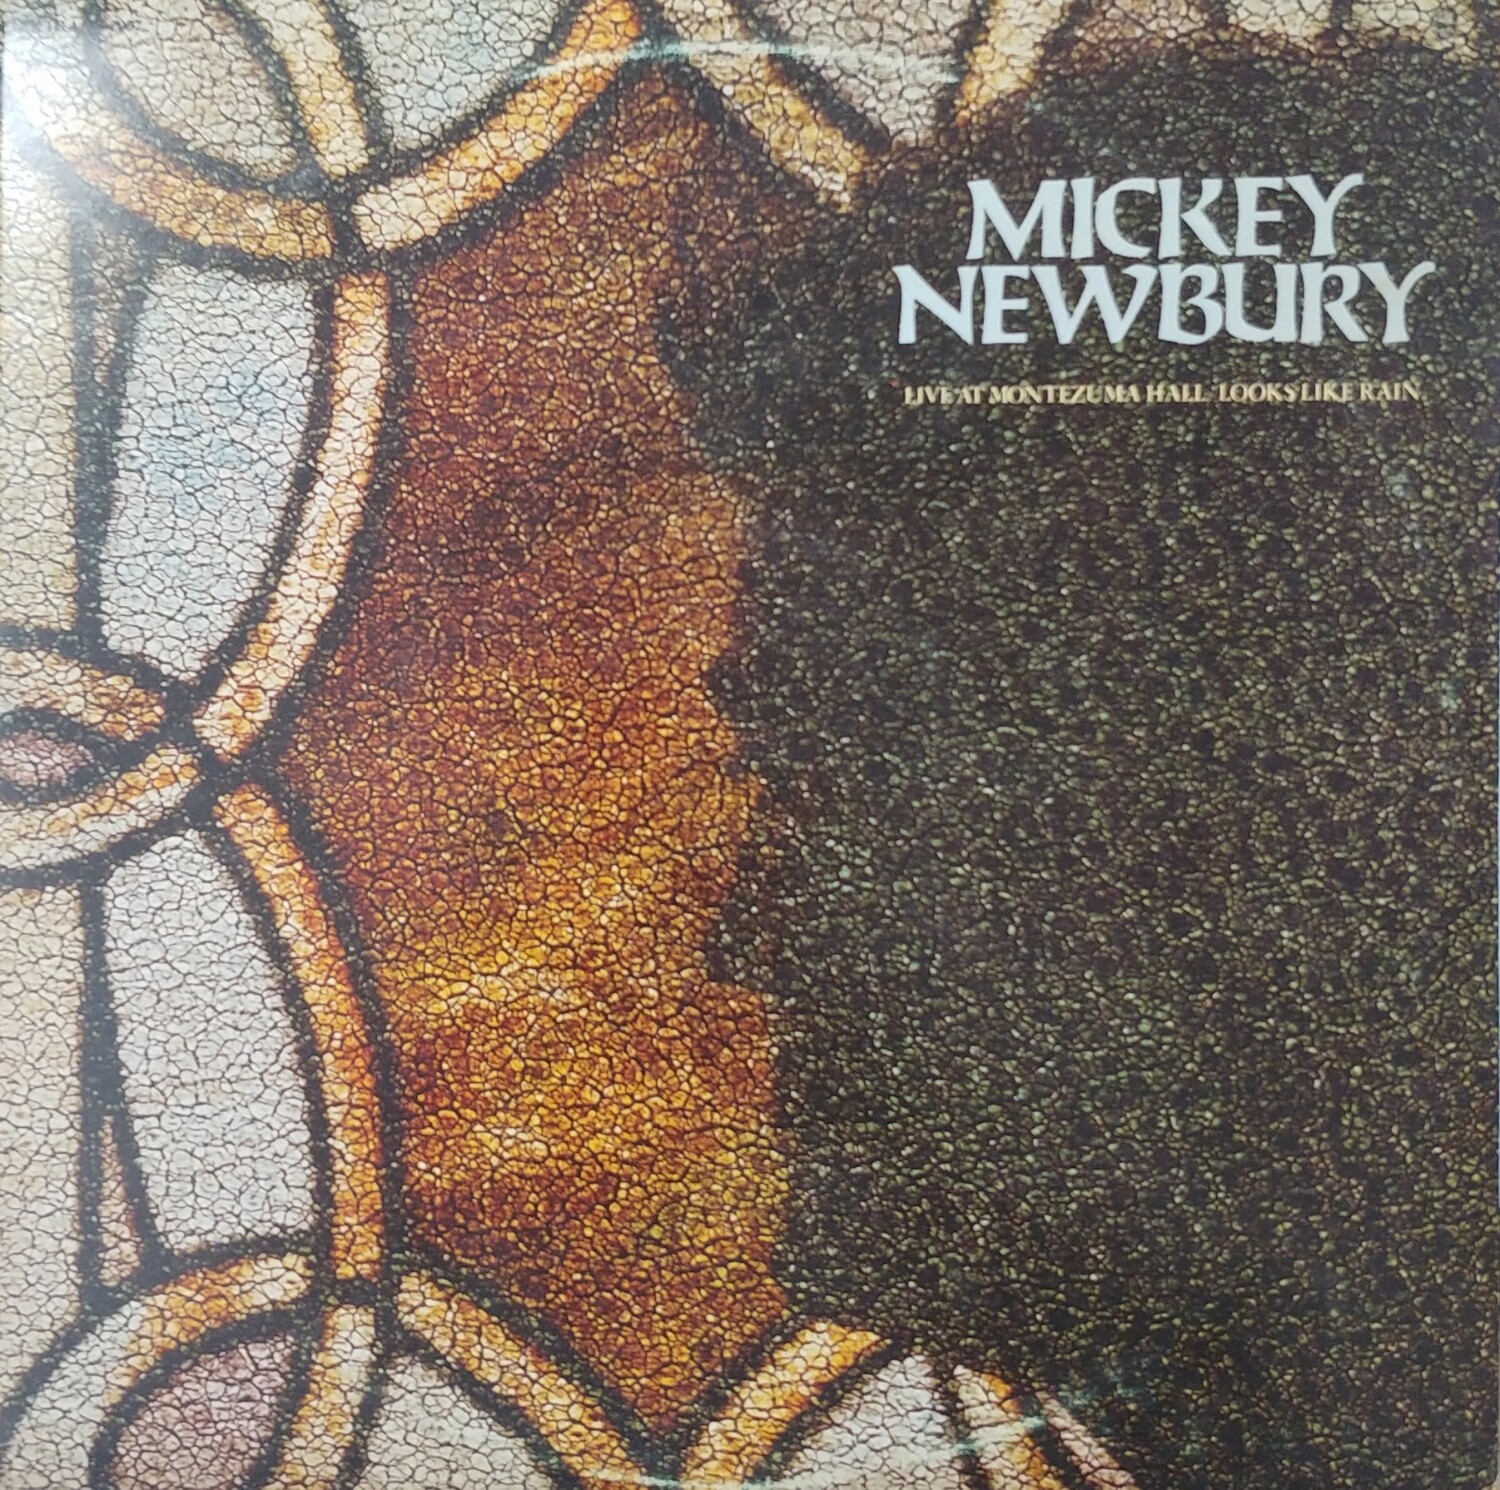 Mickey Newbury - Live at Montezuma Hall / Looks like rain